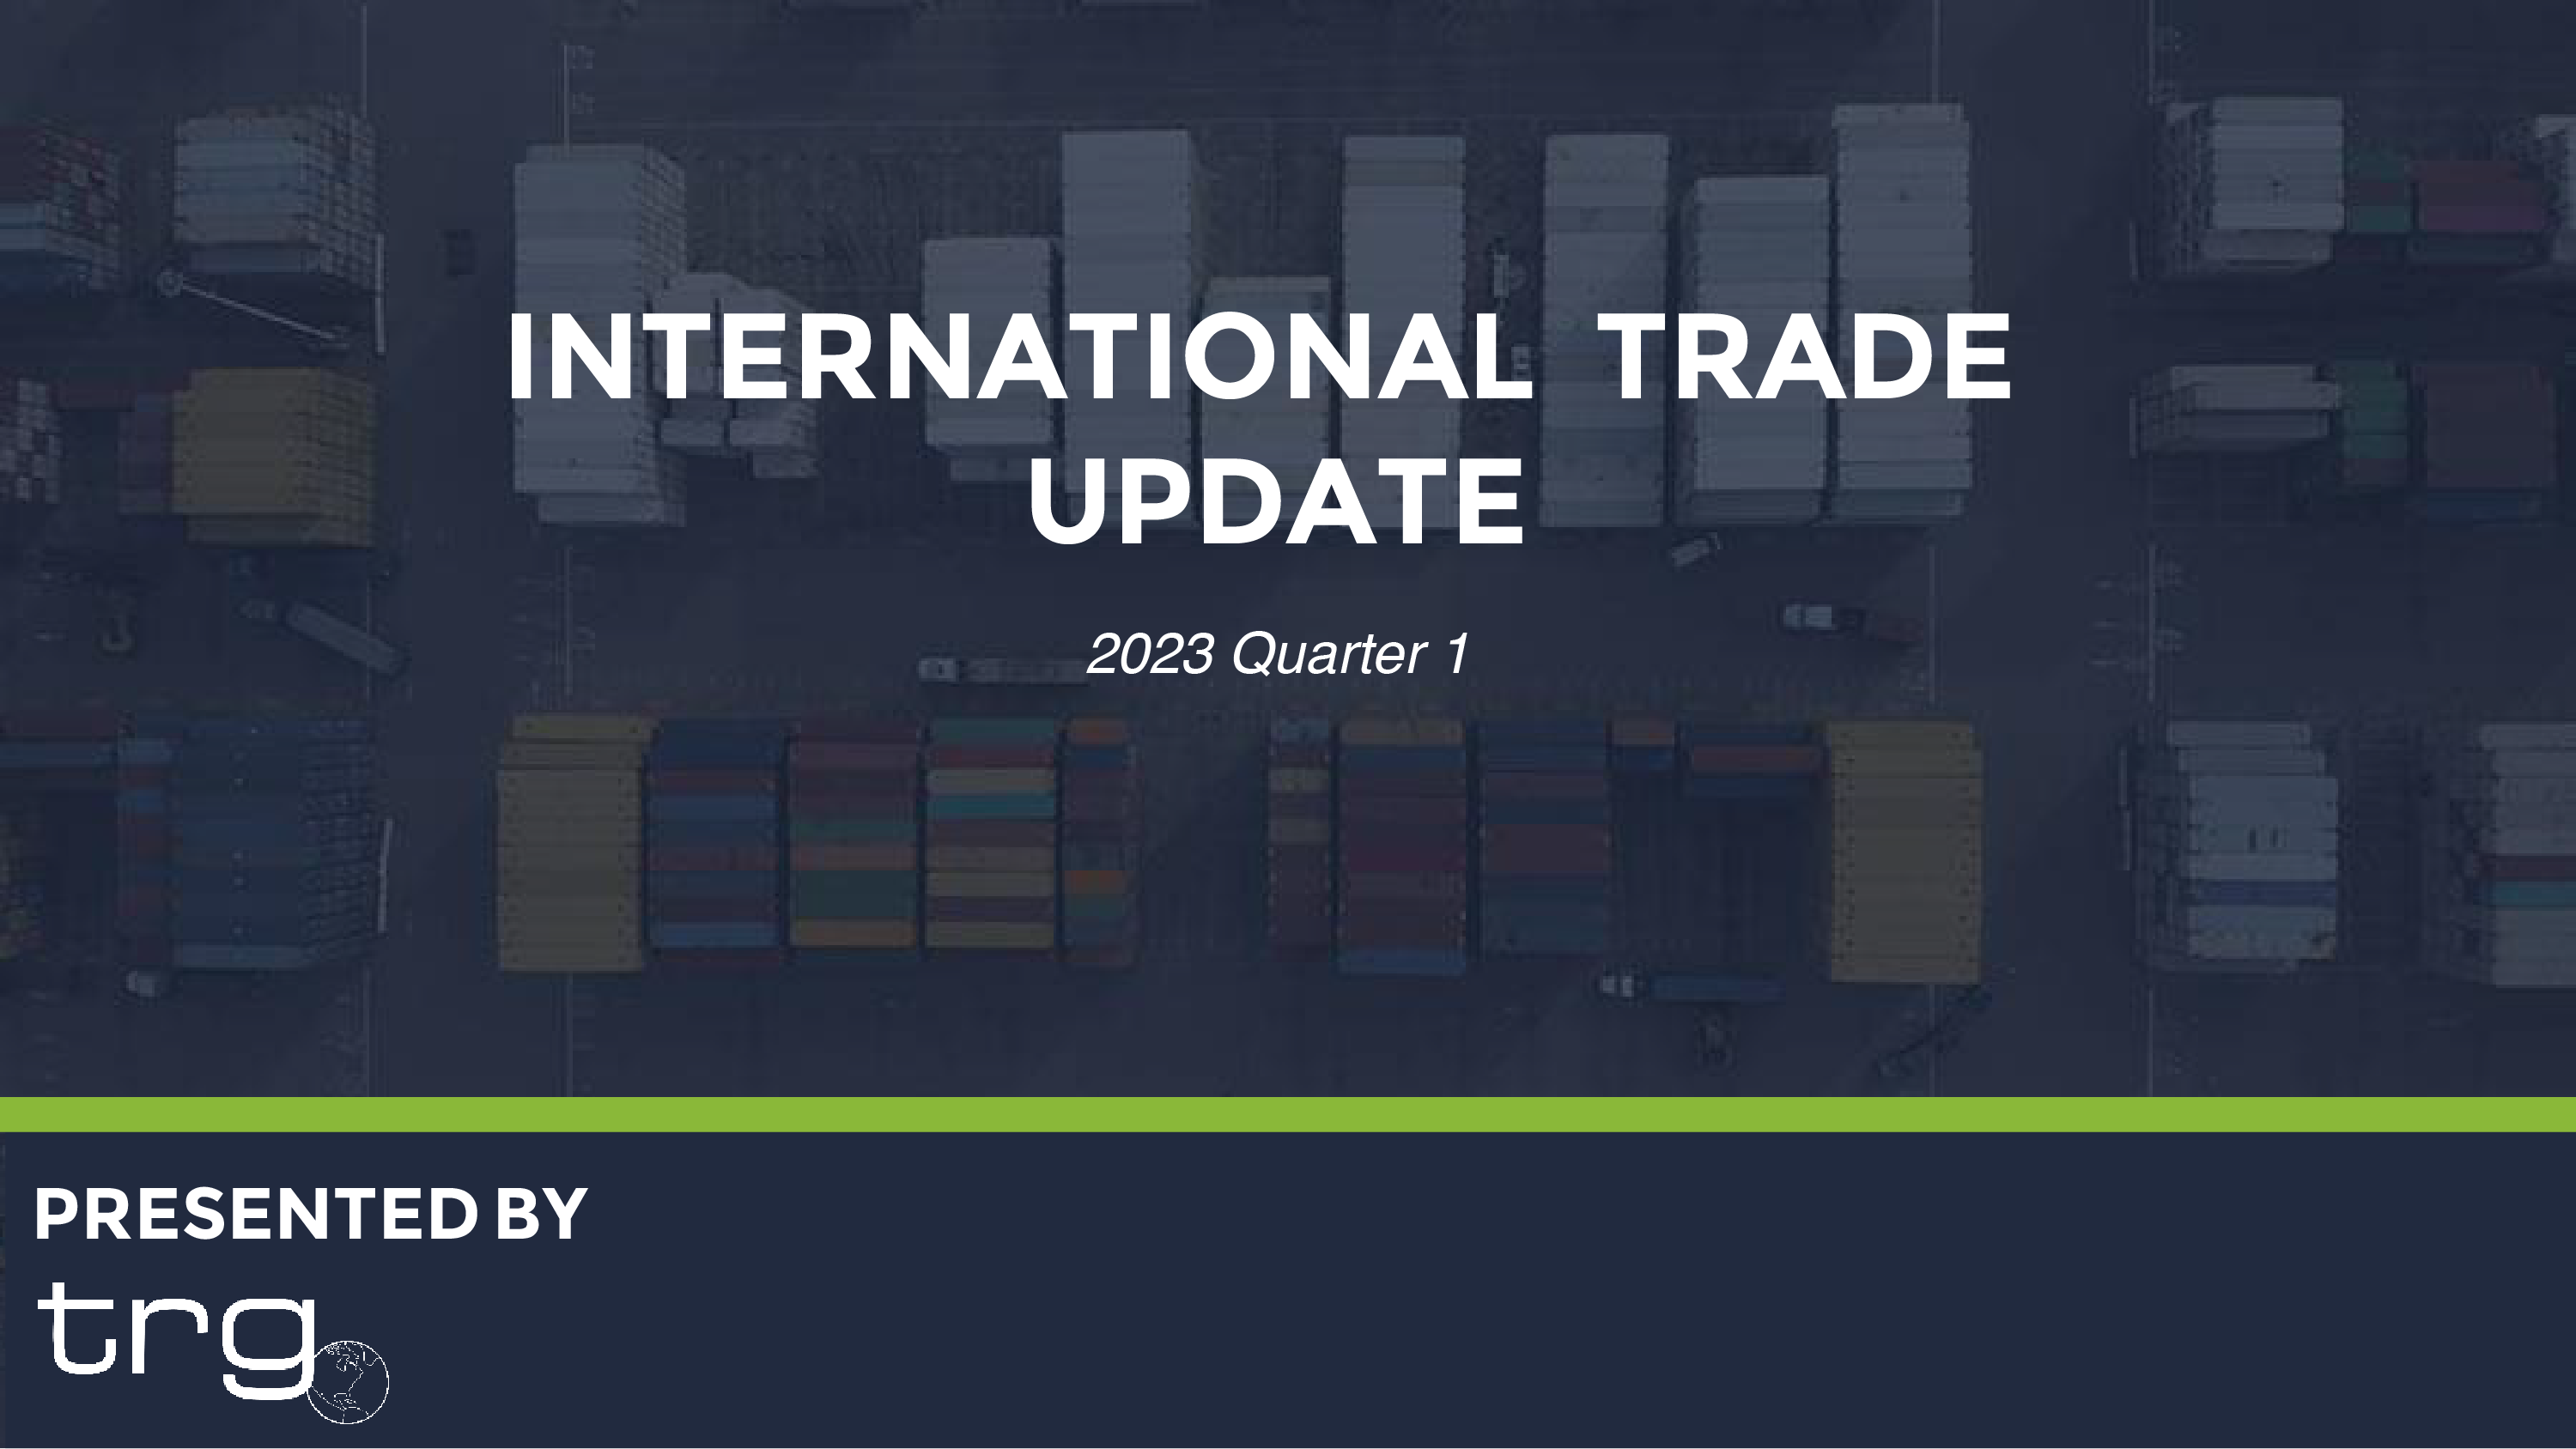 Trade Risk Guaranty hosts a webinar discussing a 2023 Q1 international trade update.